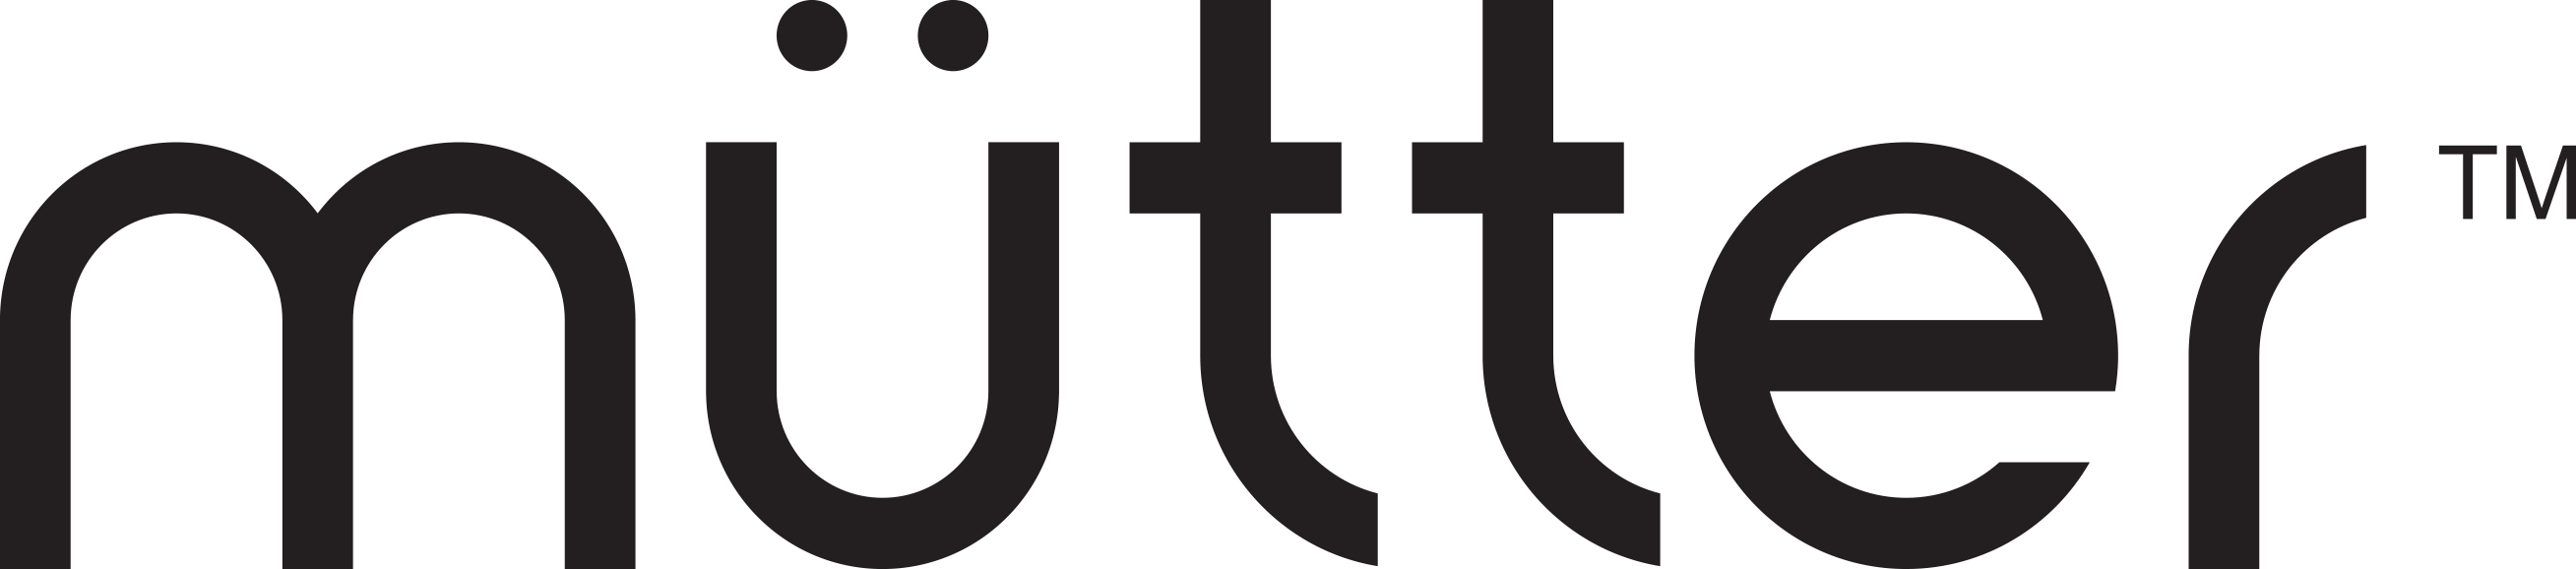 mutter logo trans black